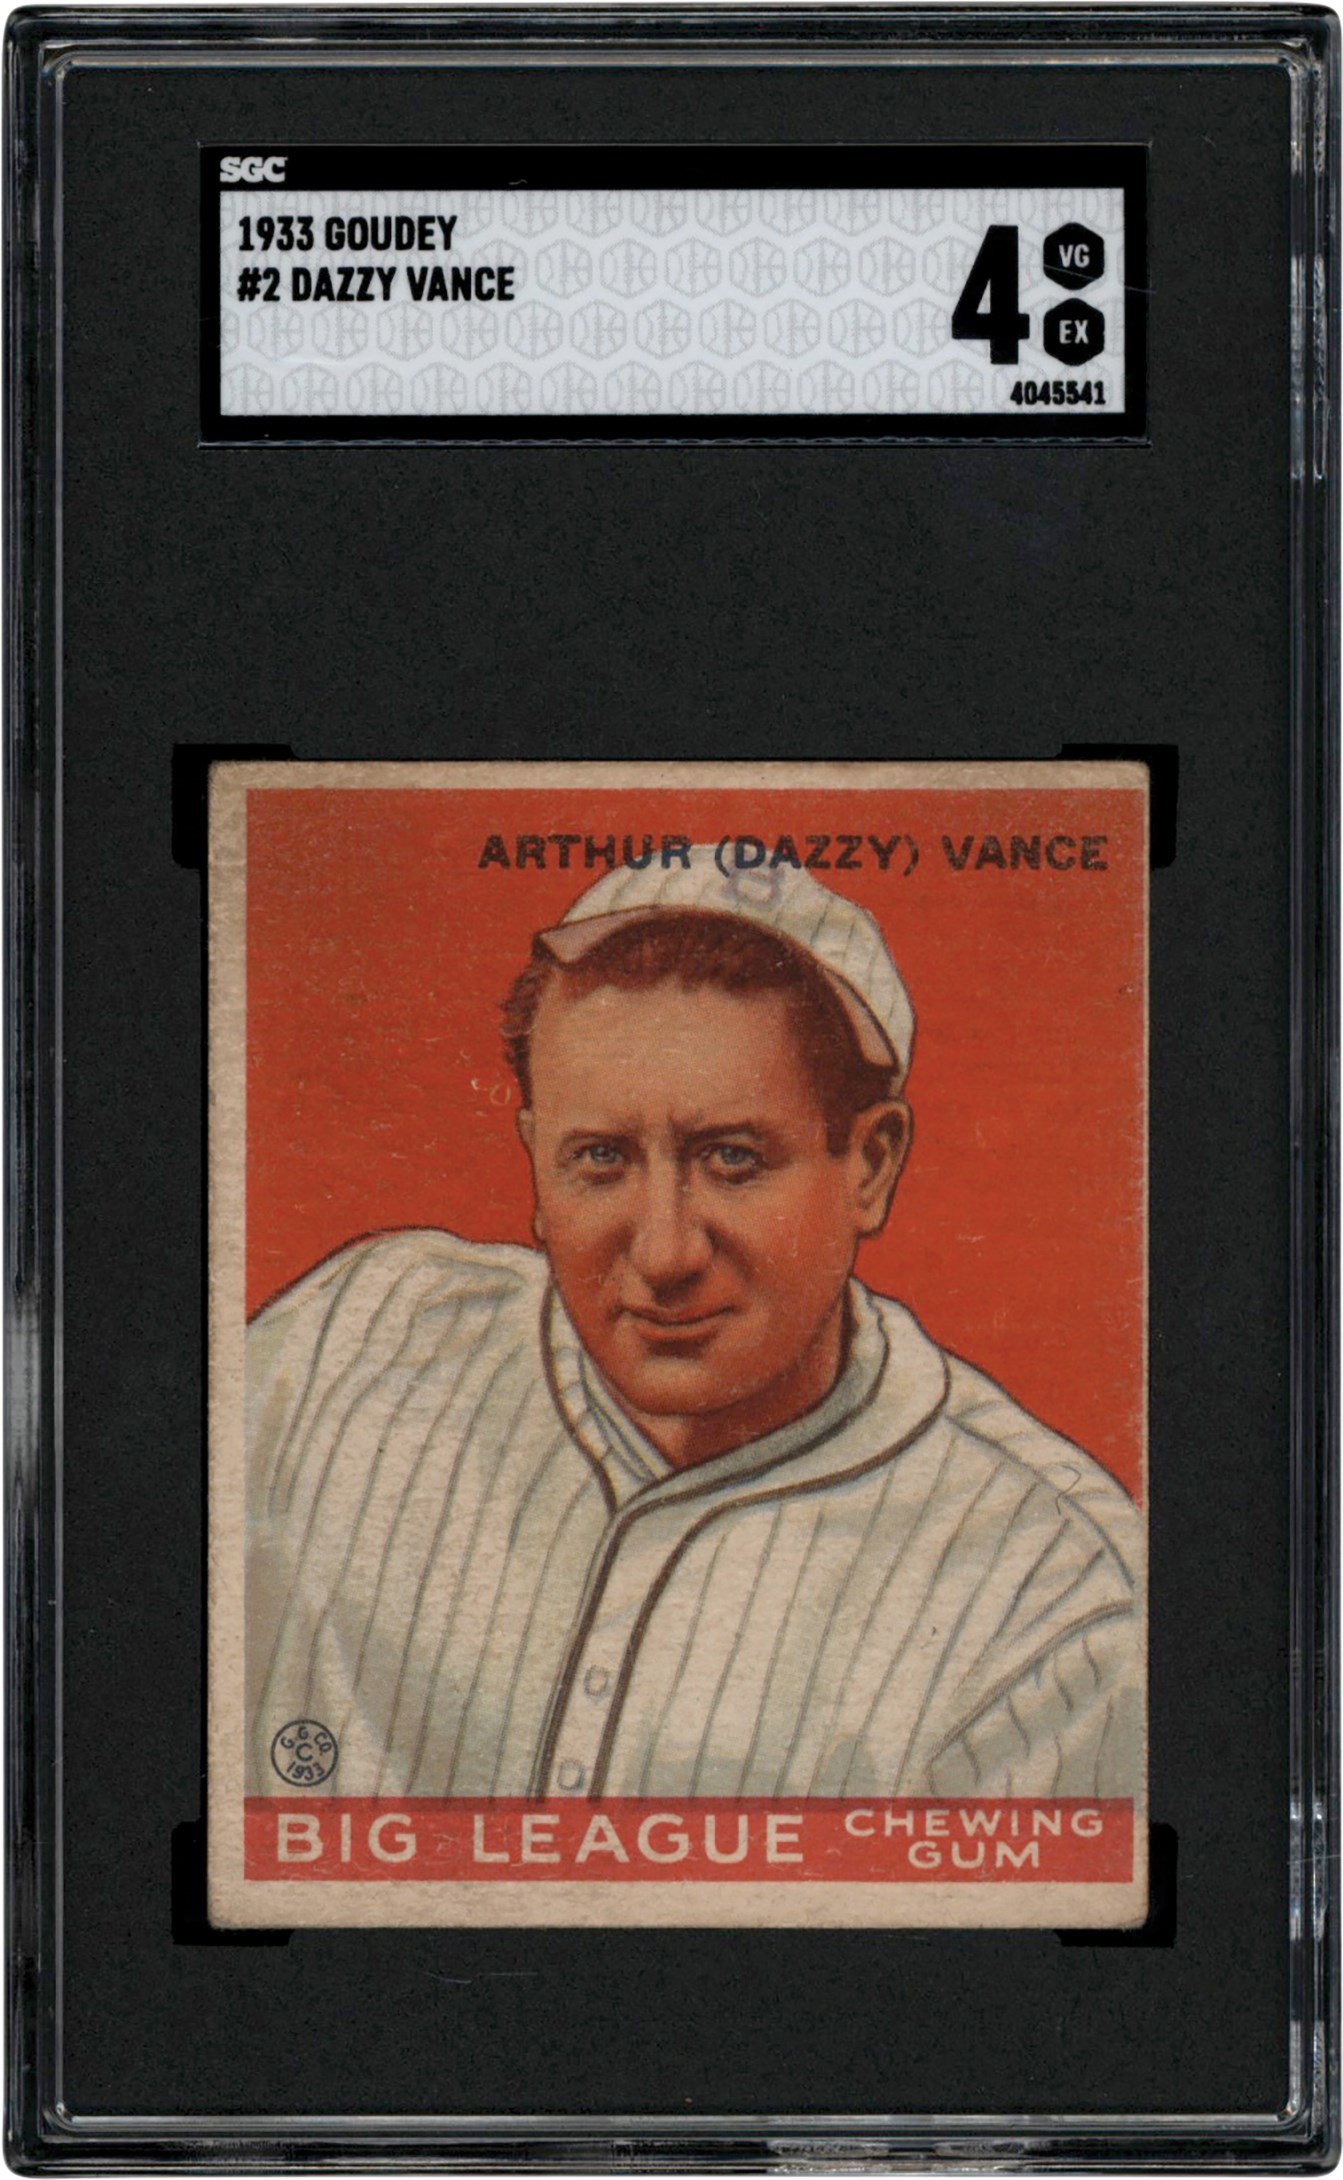 - 1933 Goudey Baseball #2 Dazzy Vance SGC VG-EX 4